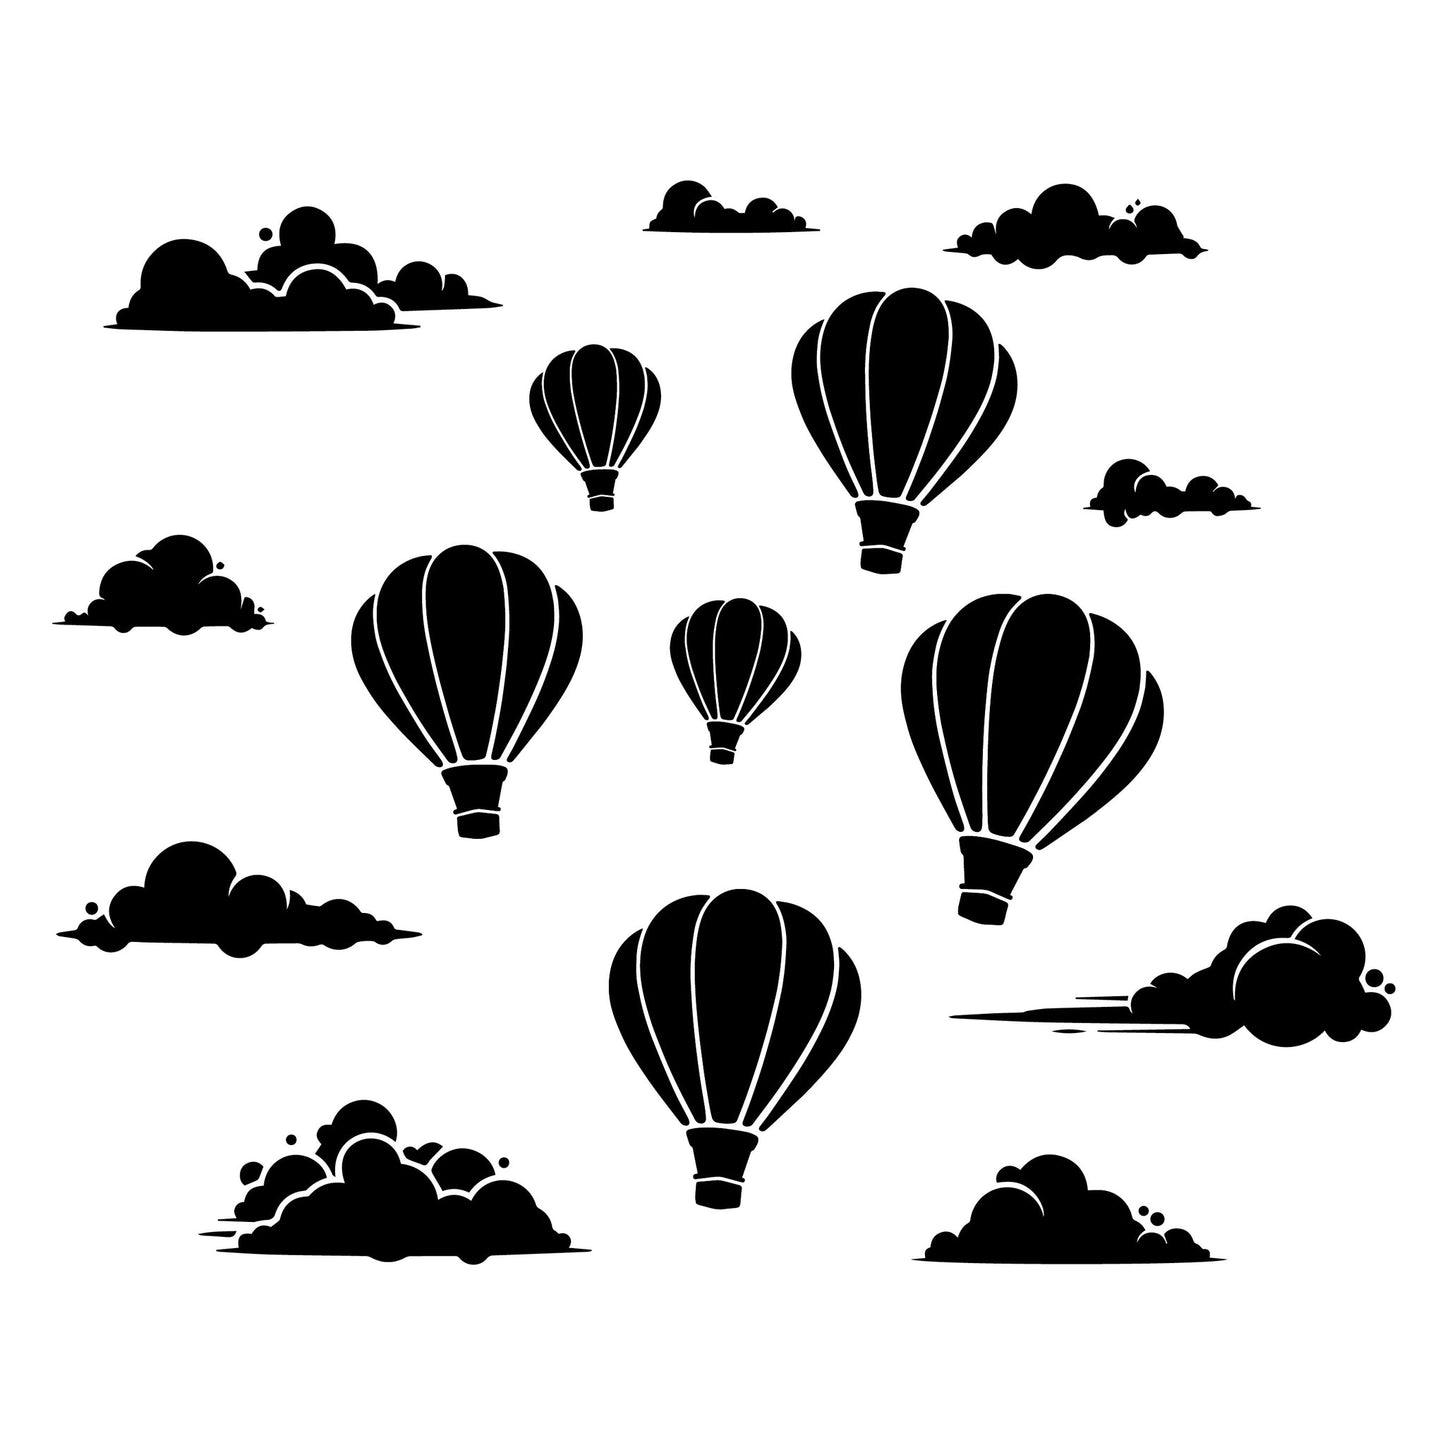 Balloons & Cloud Theme - Wall Decal Sticker Pack - Design